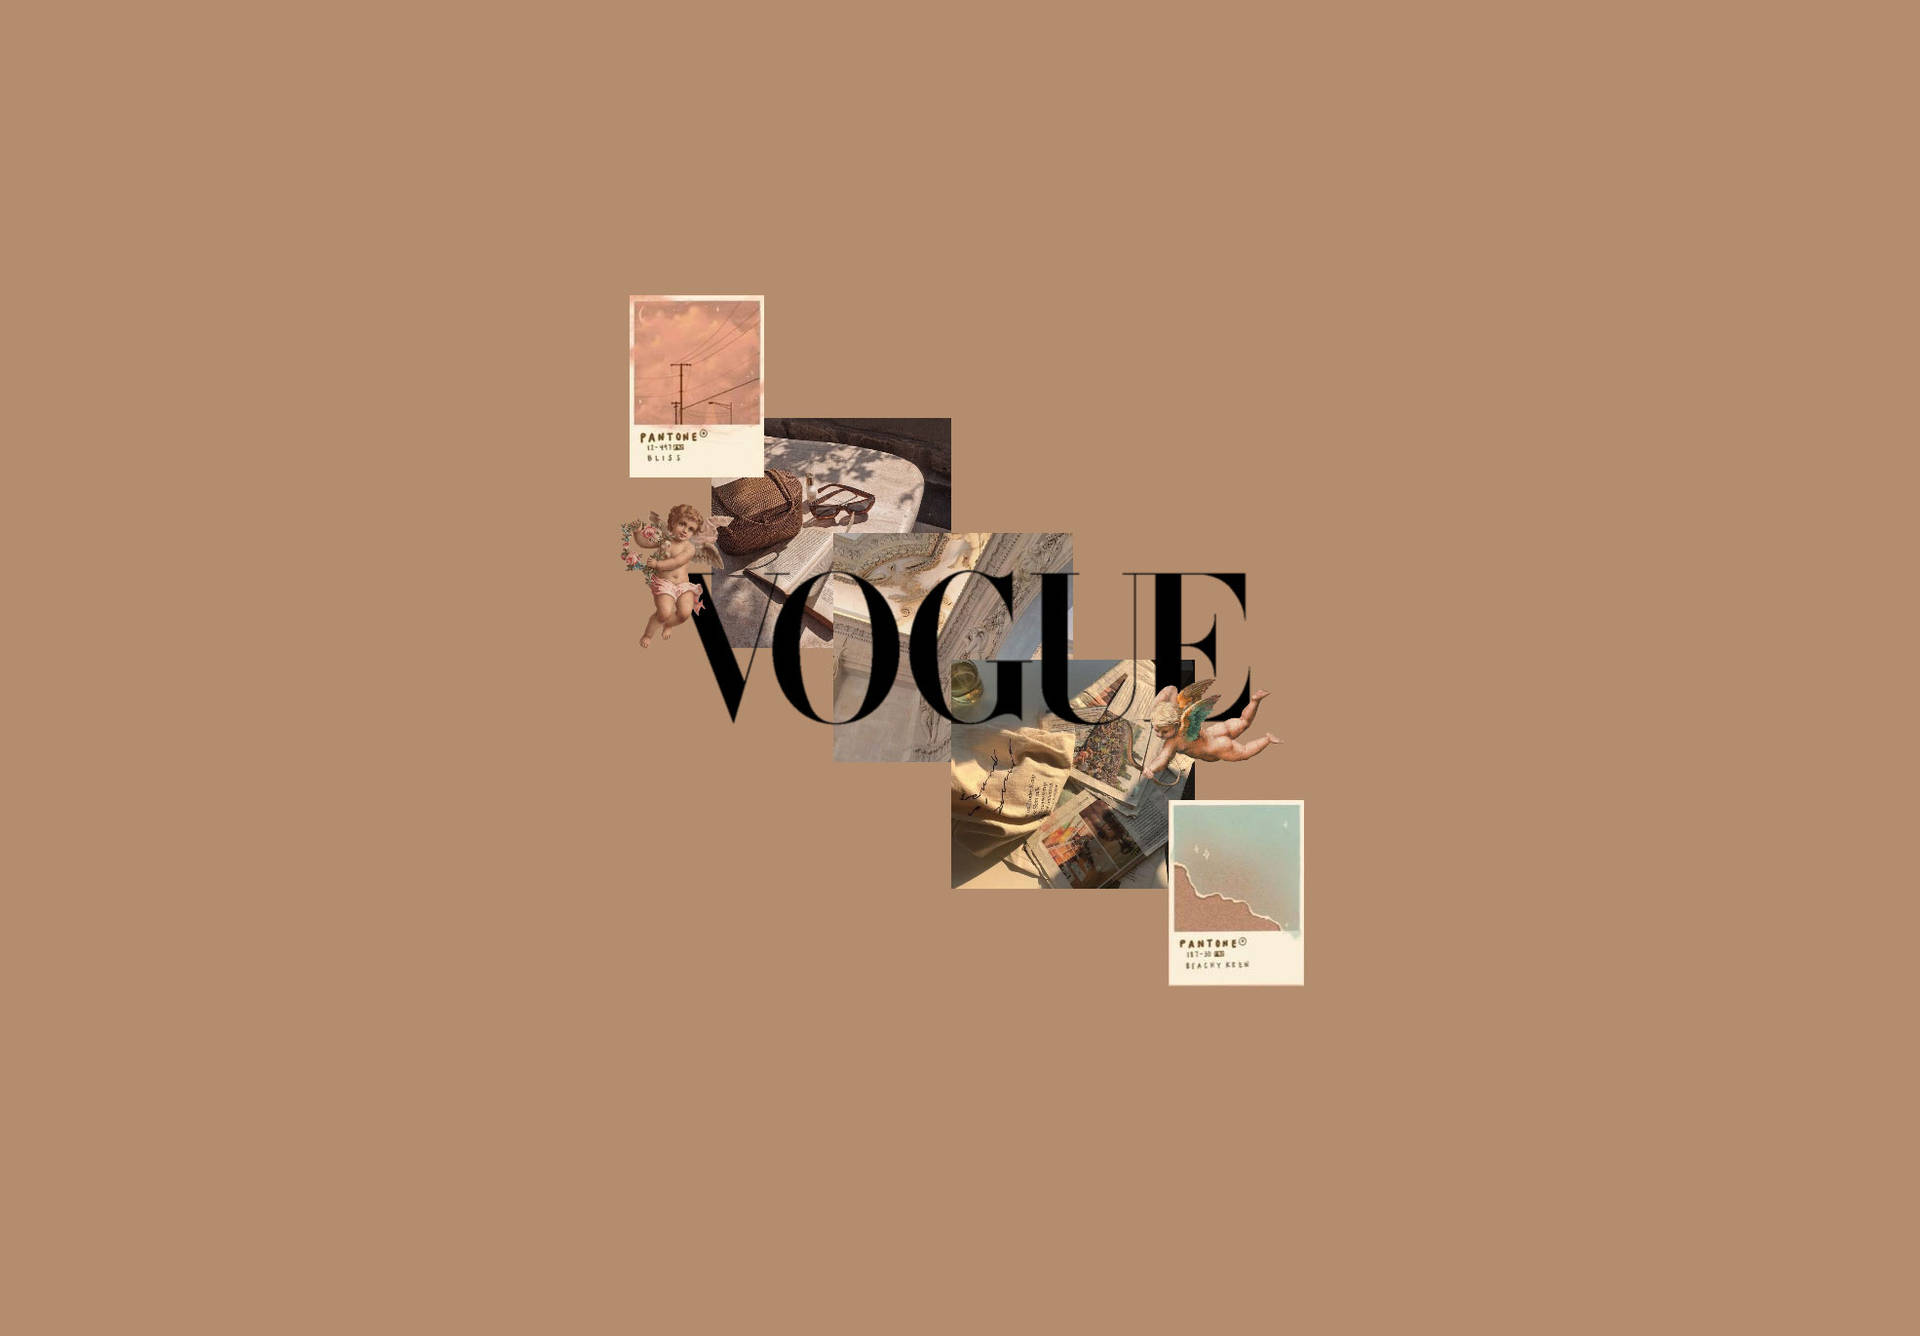 Vogue Magazine On Beige Brown Aesthetic Background